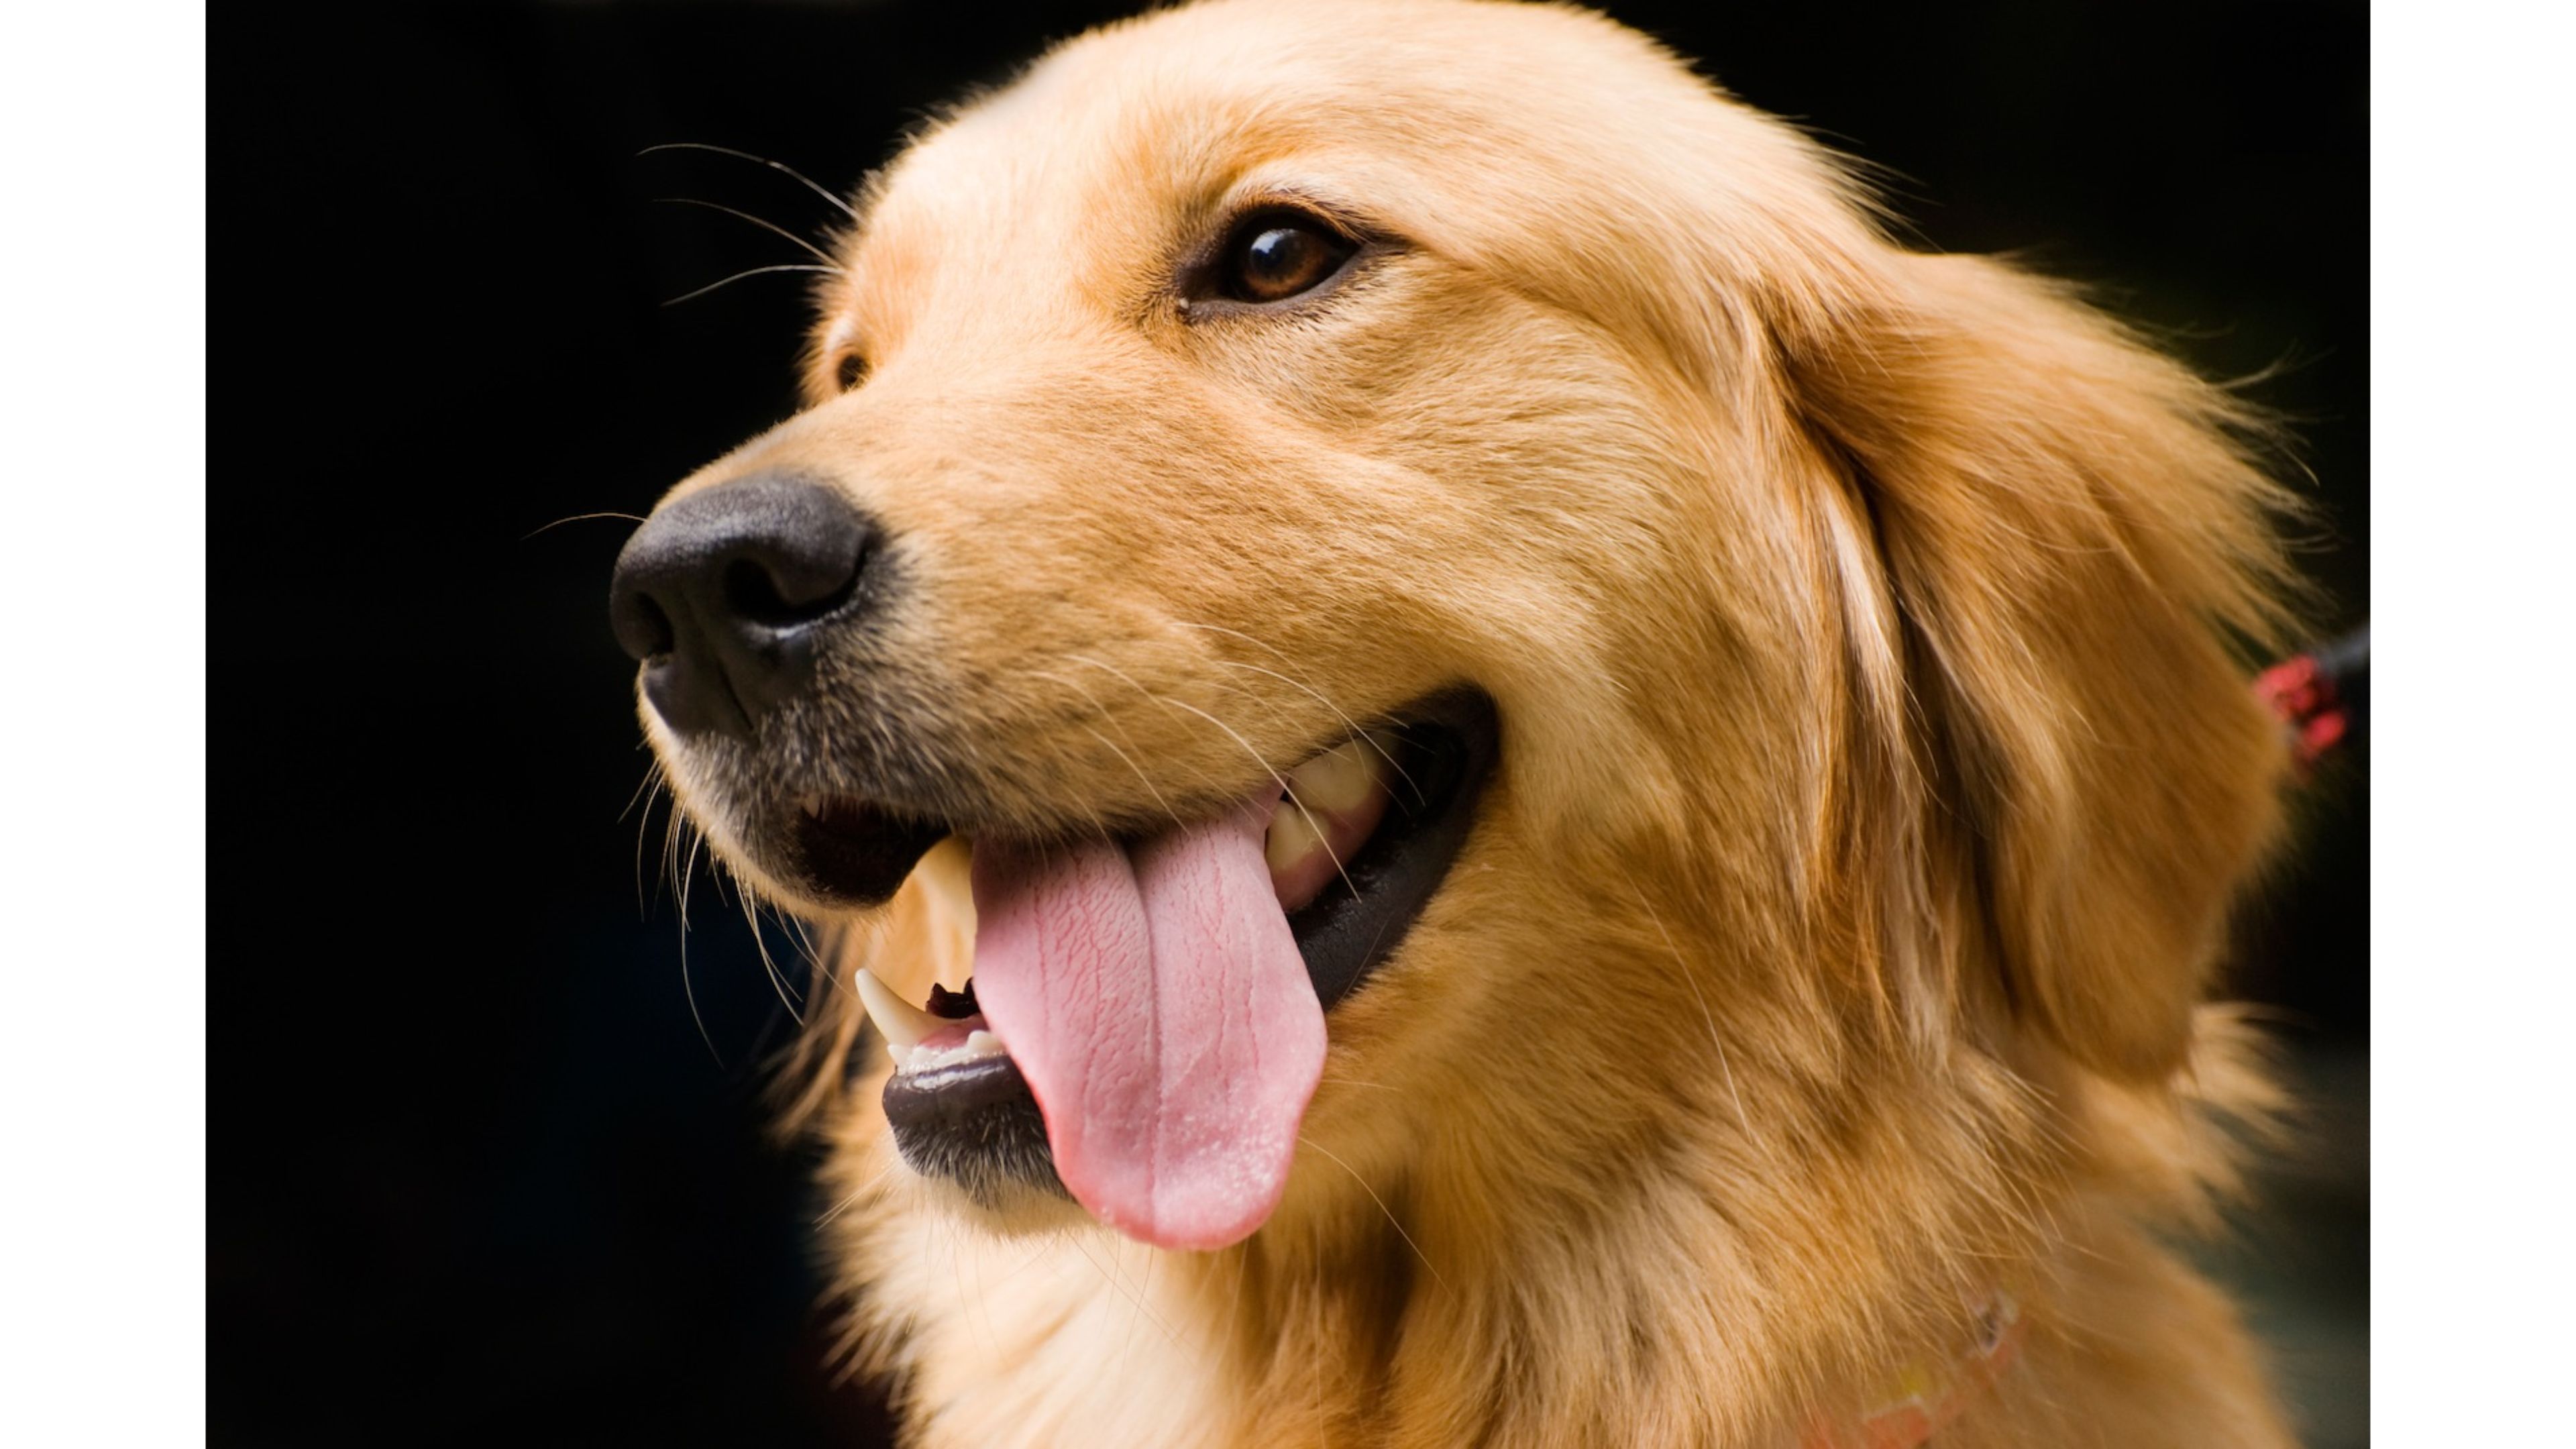 Recklessly: Golden Retriever Puppy Wallpaper For Ipad